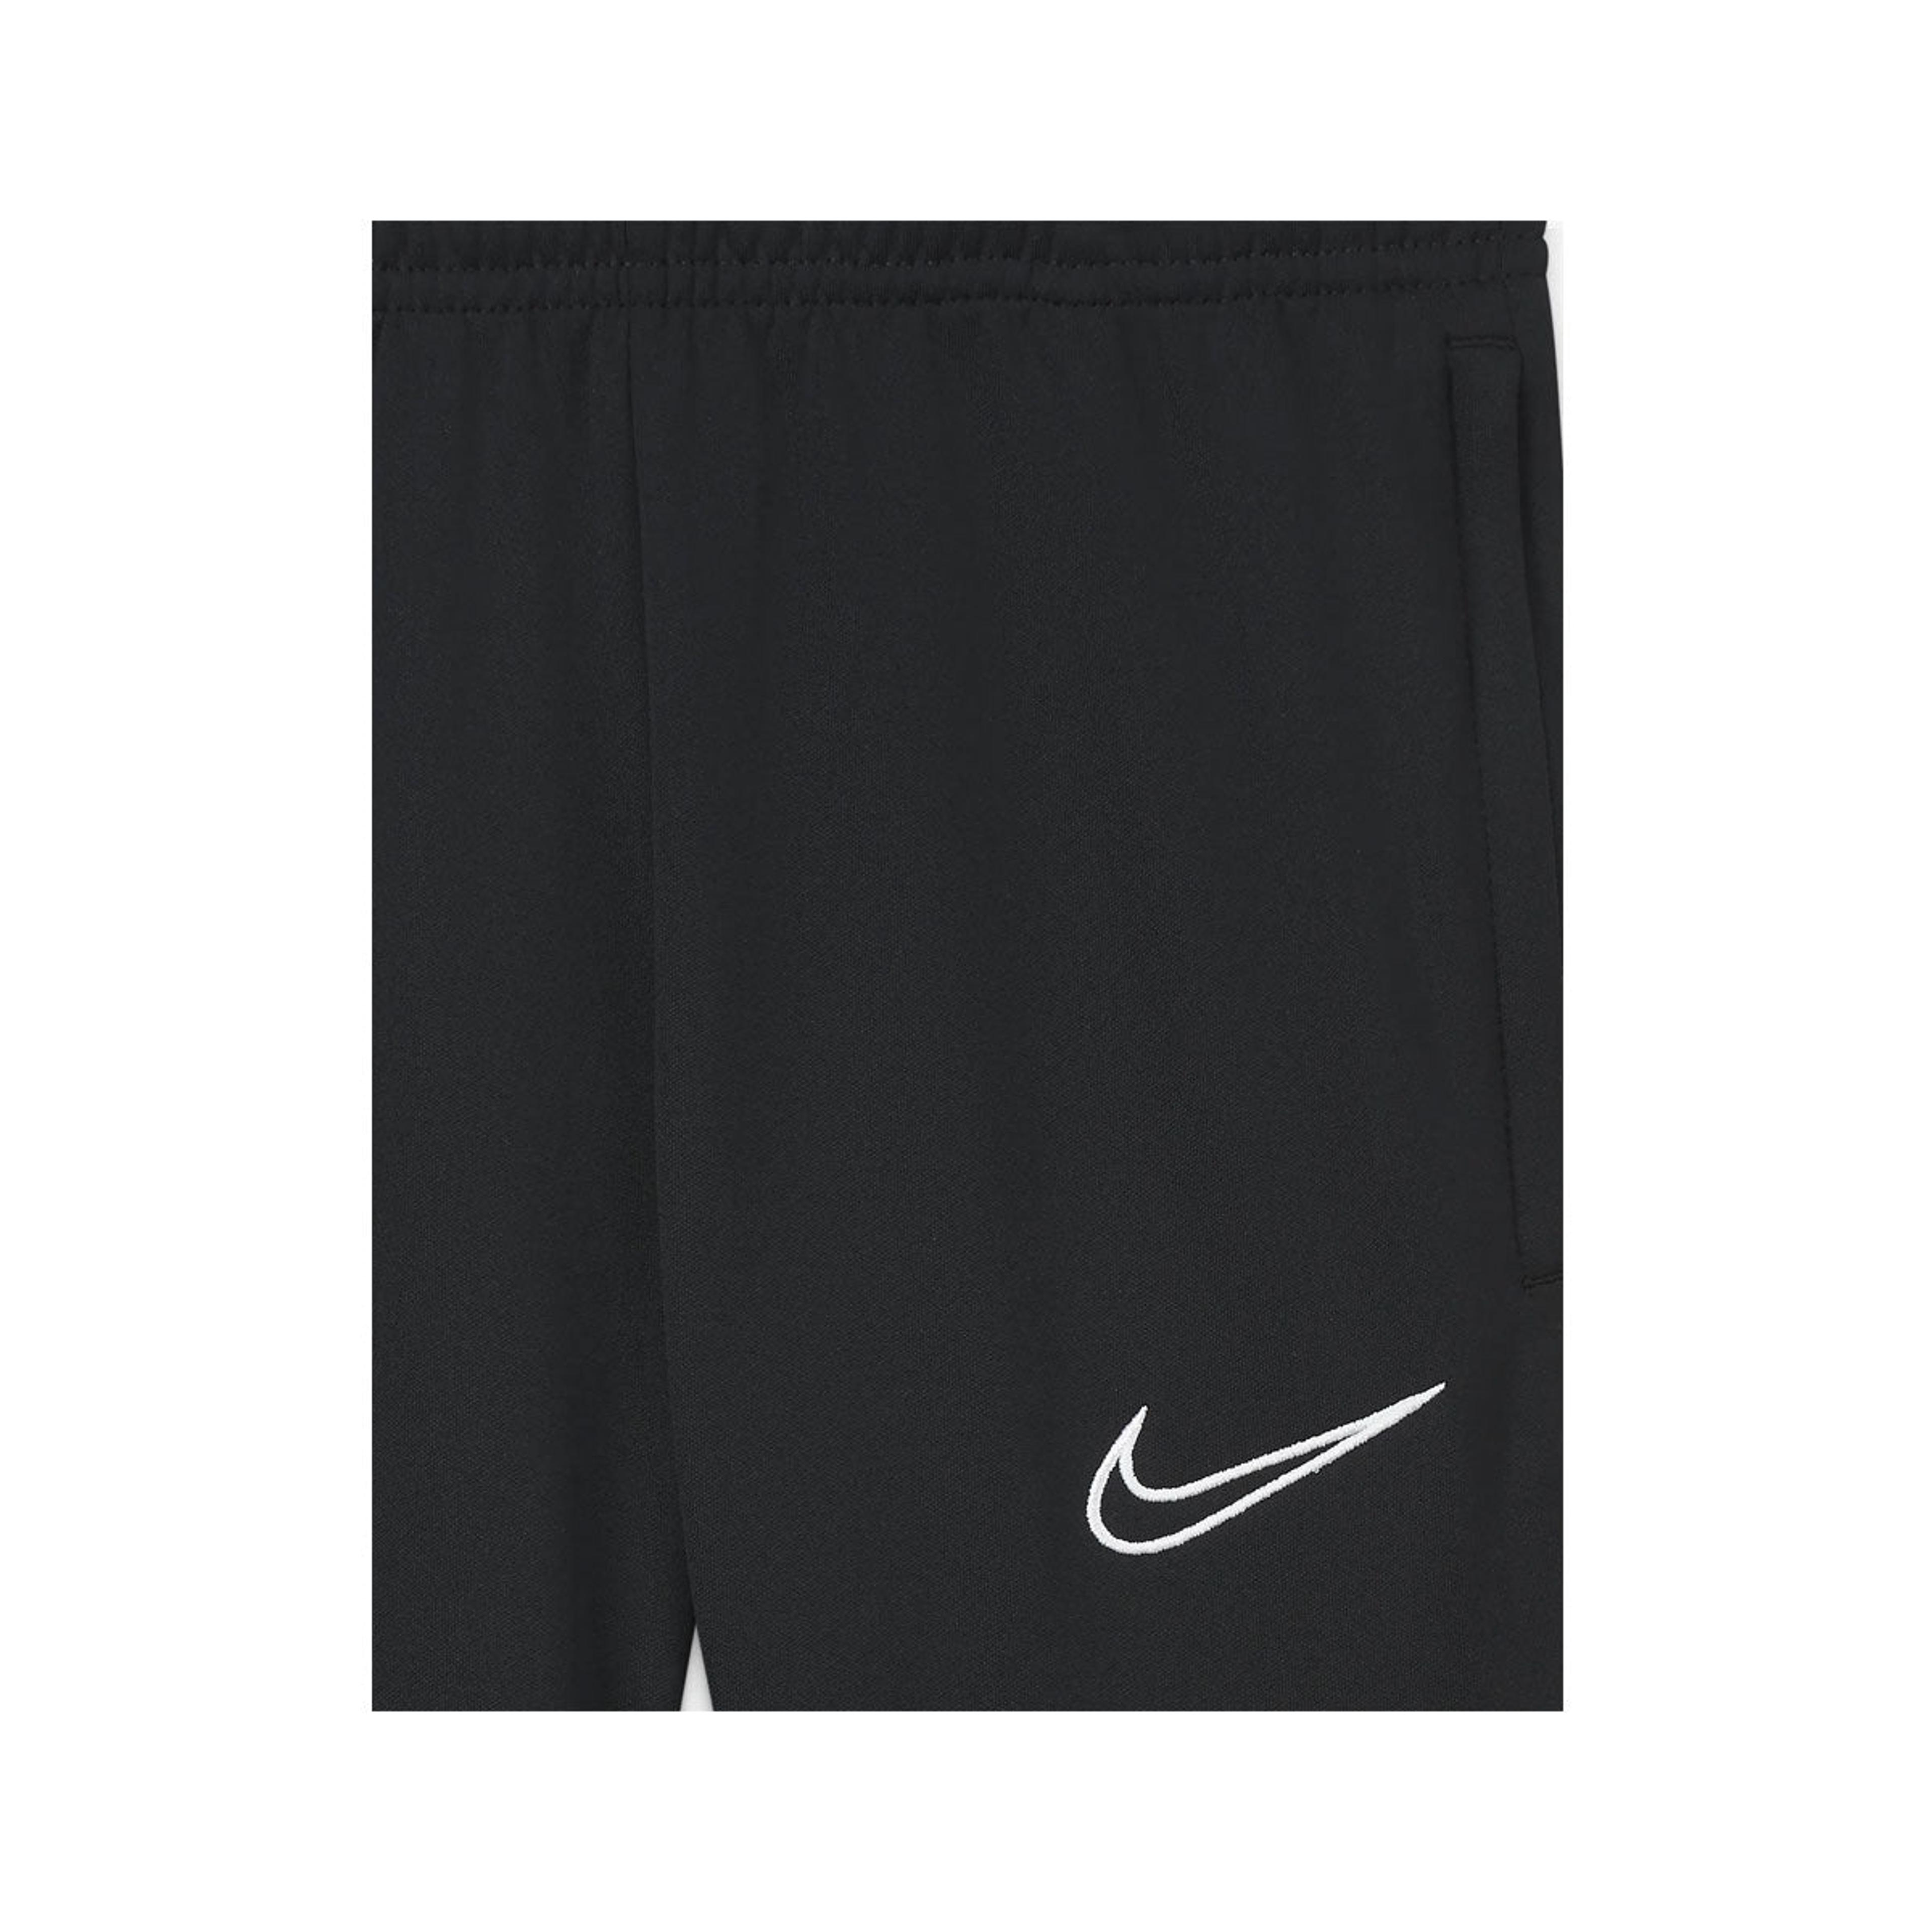 Alternate View 1 of Nike Boy's Academy Knit Football Pants